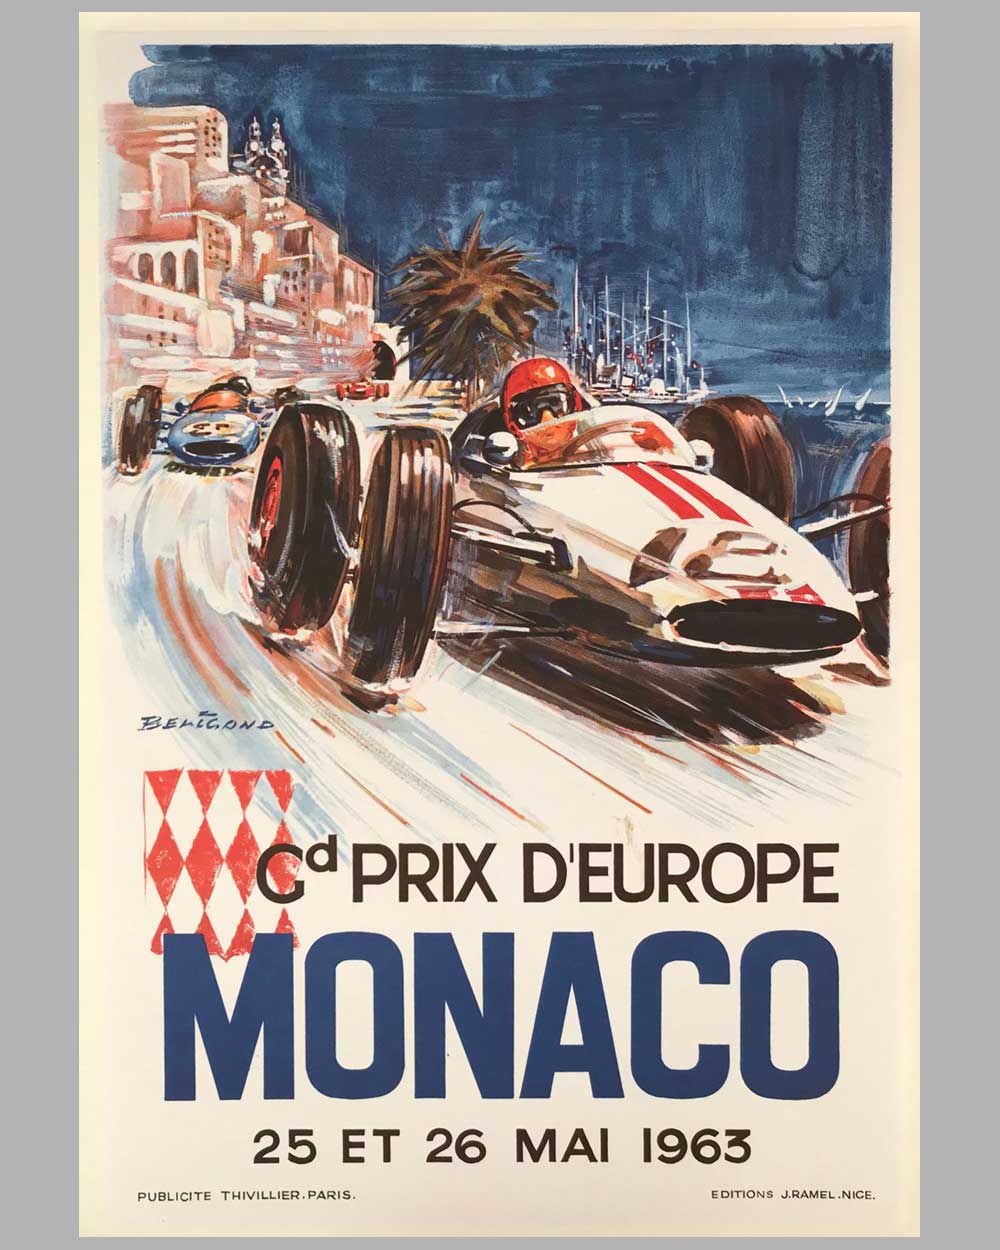 1963 Grand Prix of Monaco poster by Beligond